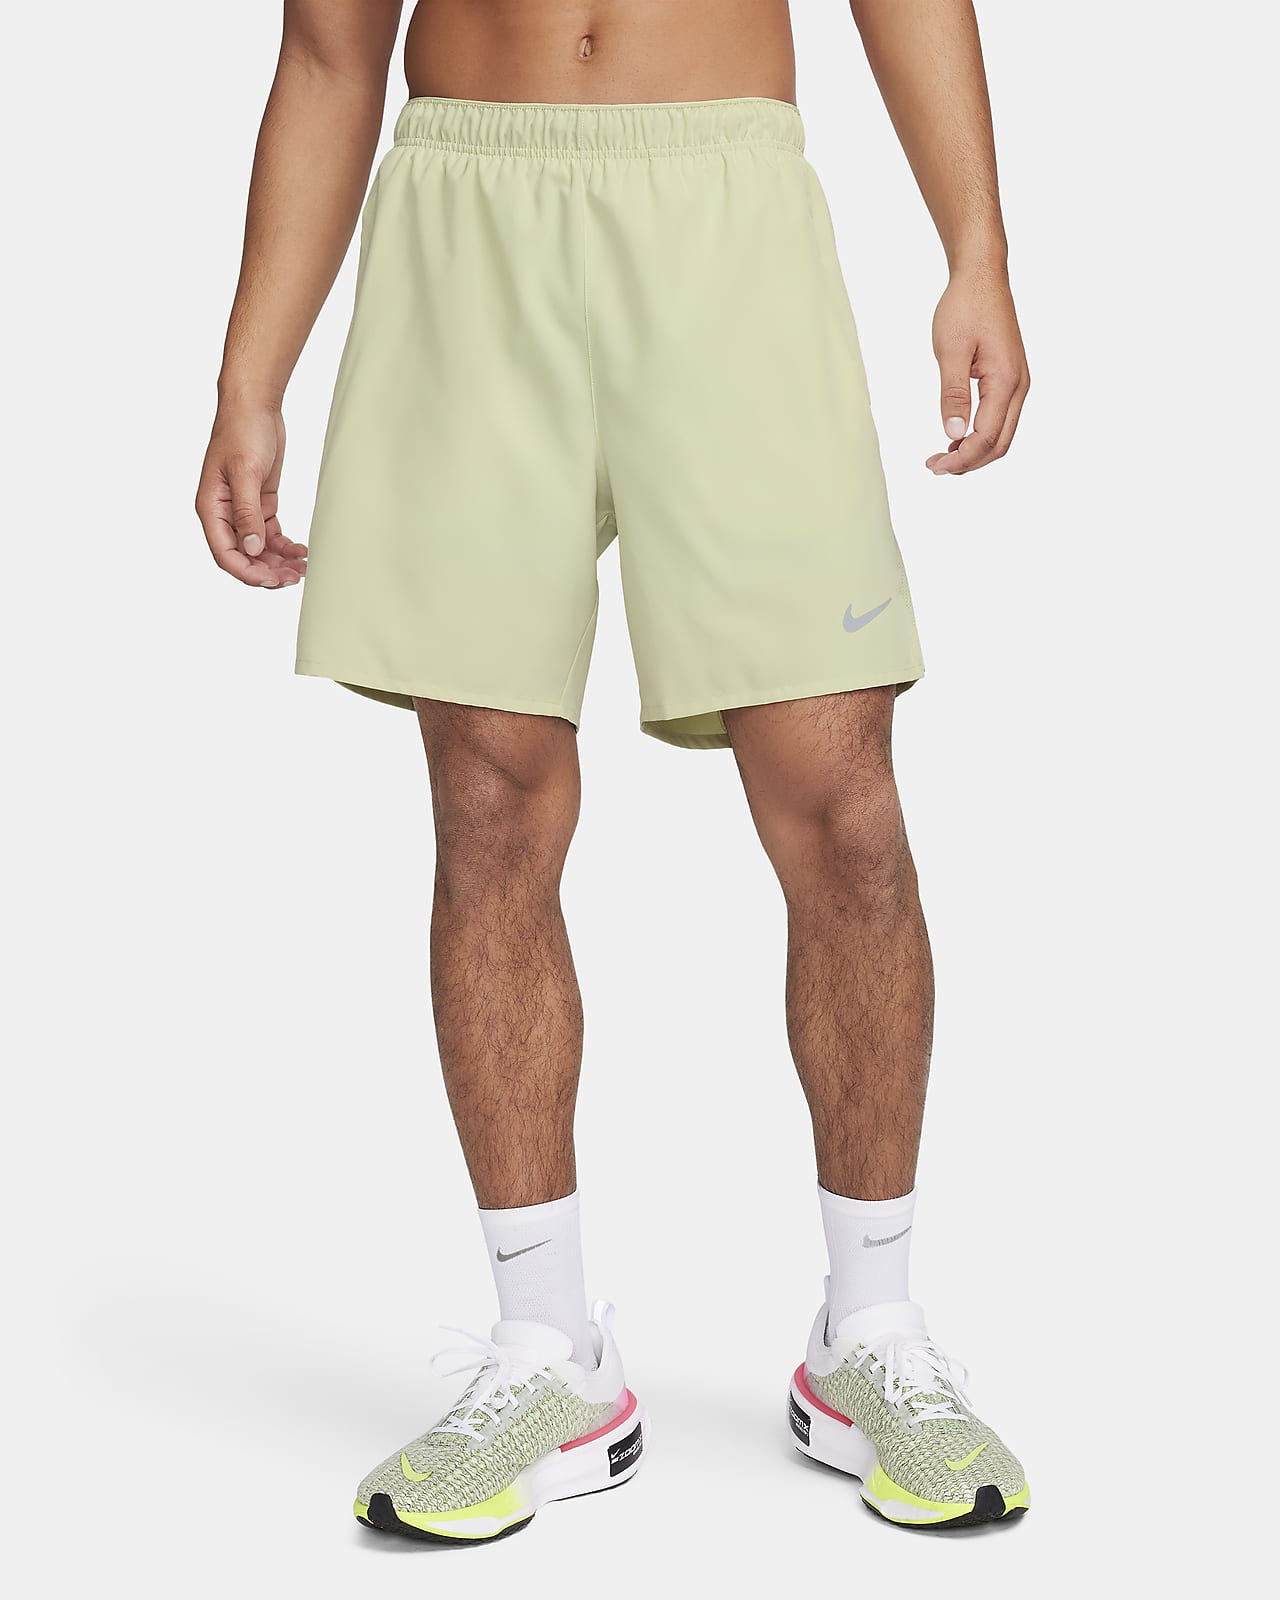 Nike Men's Running Shorts